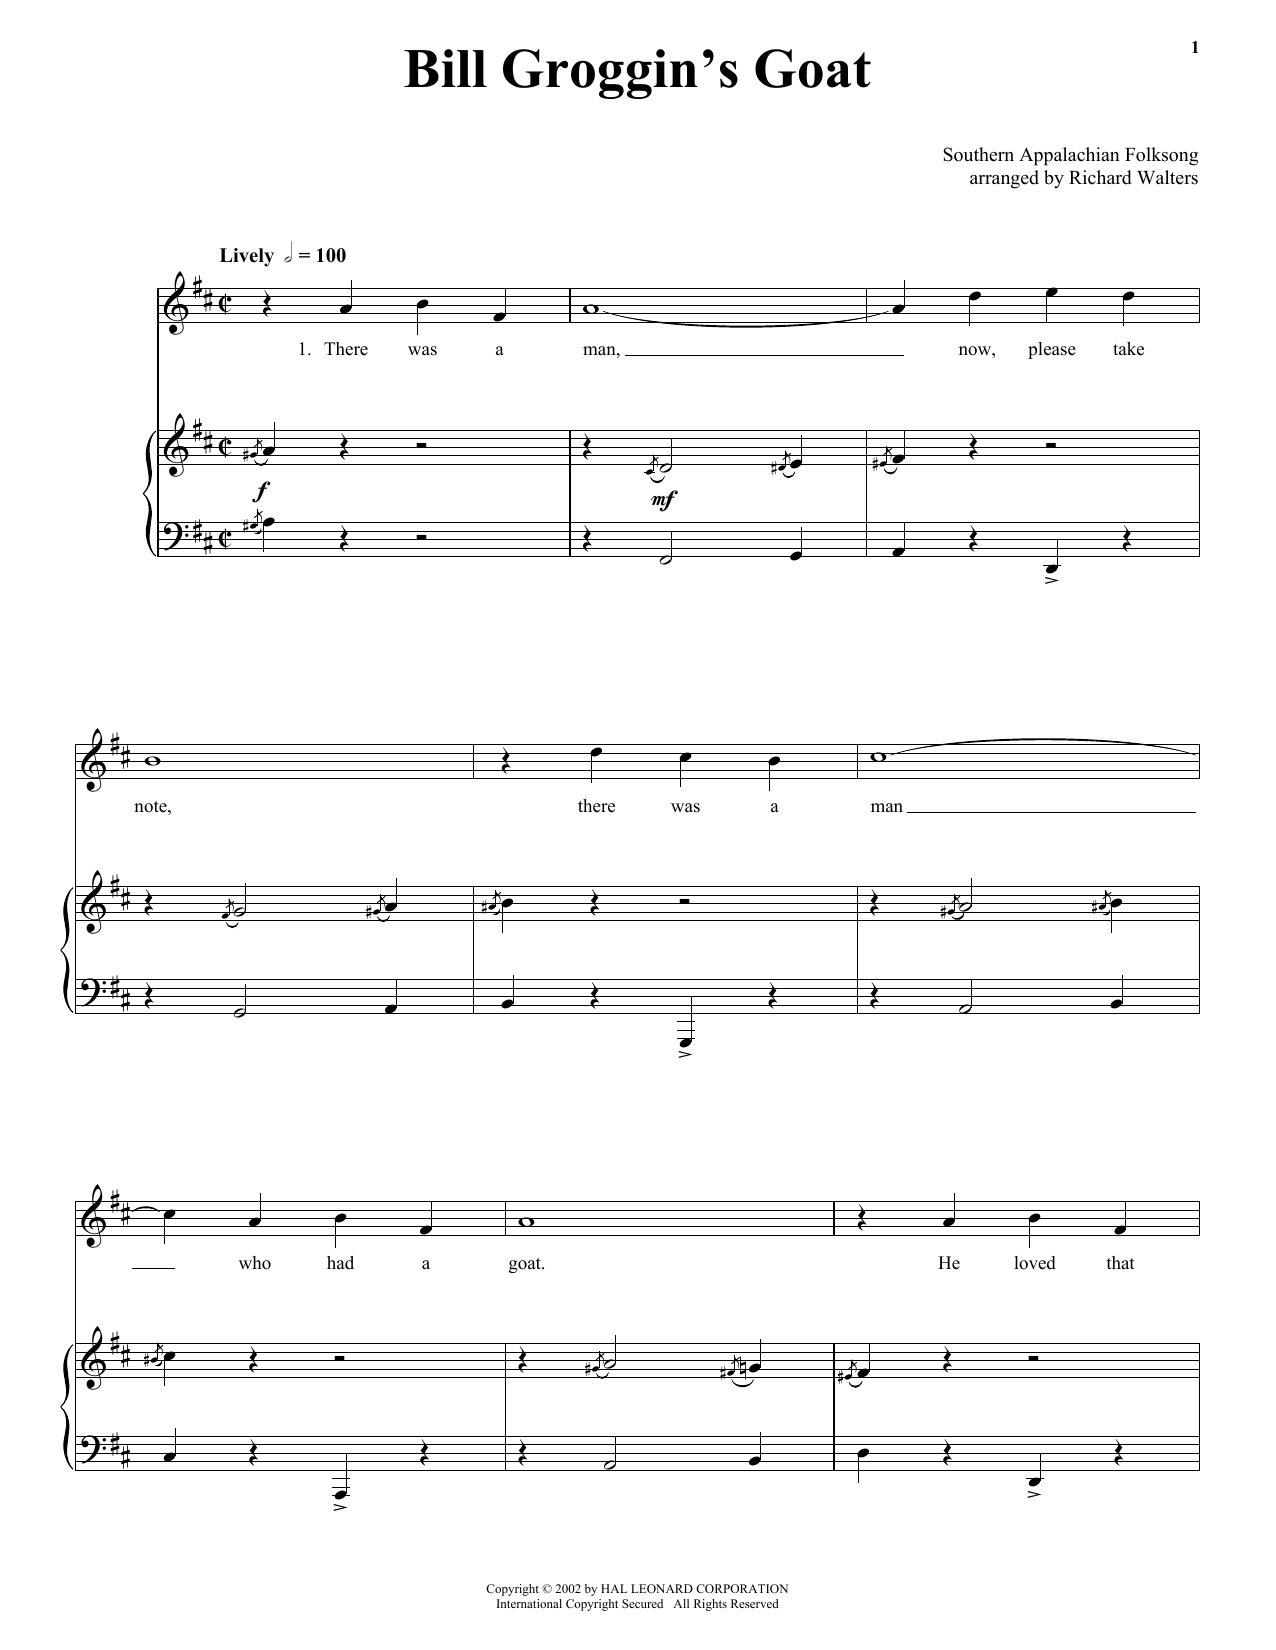 Download 19th Century American Folksong Bill Grogan's Goat Sheet Music